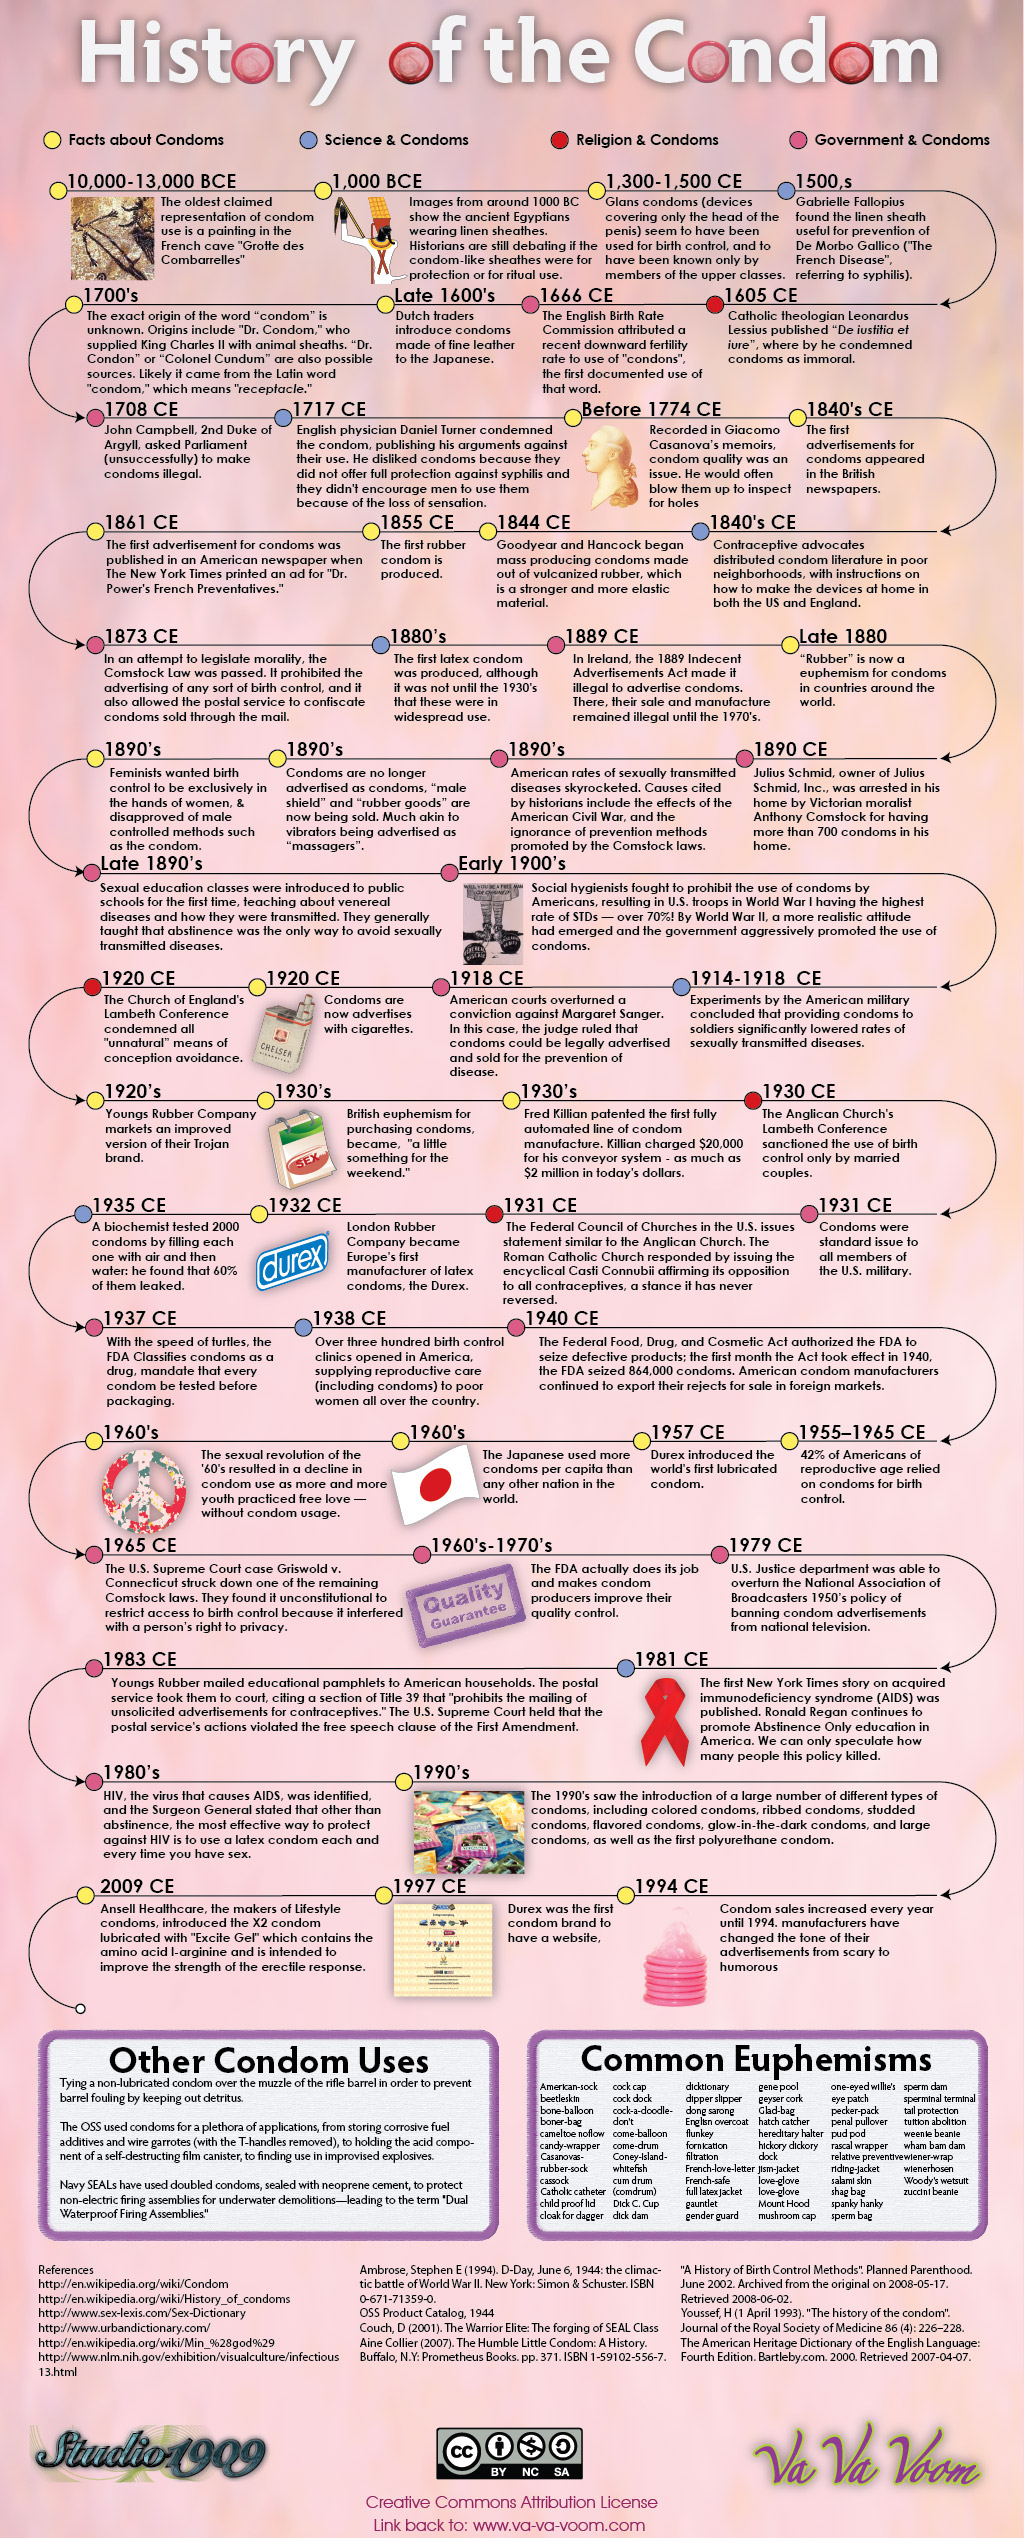 History of the Condom